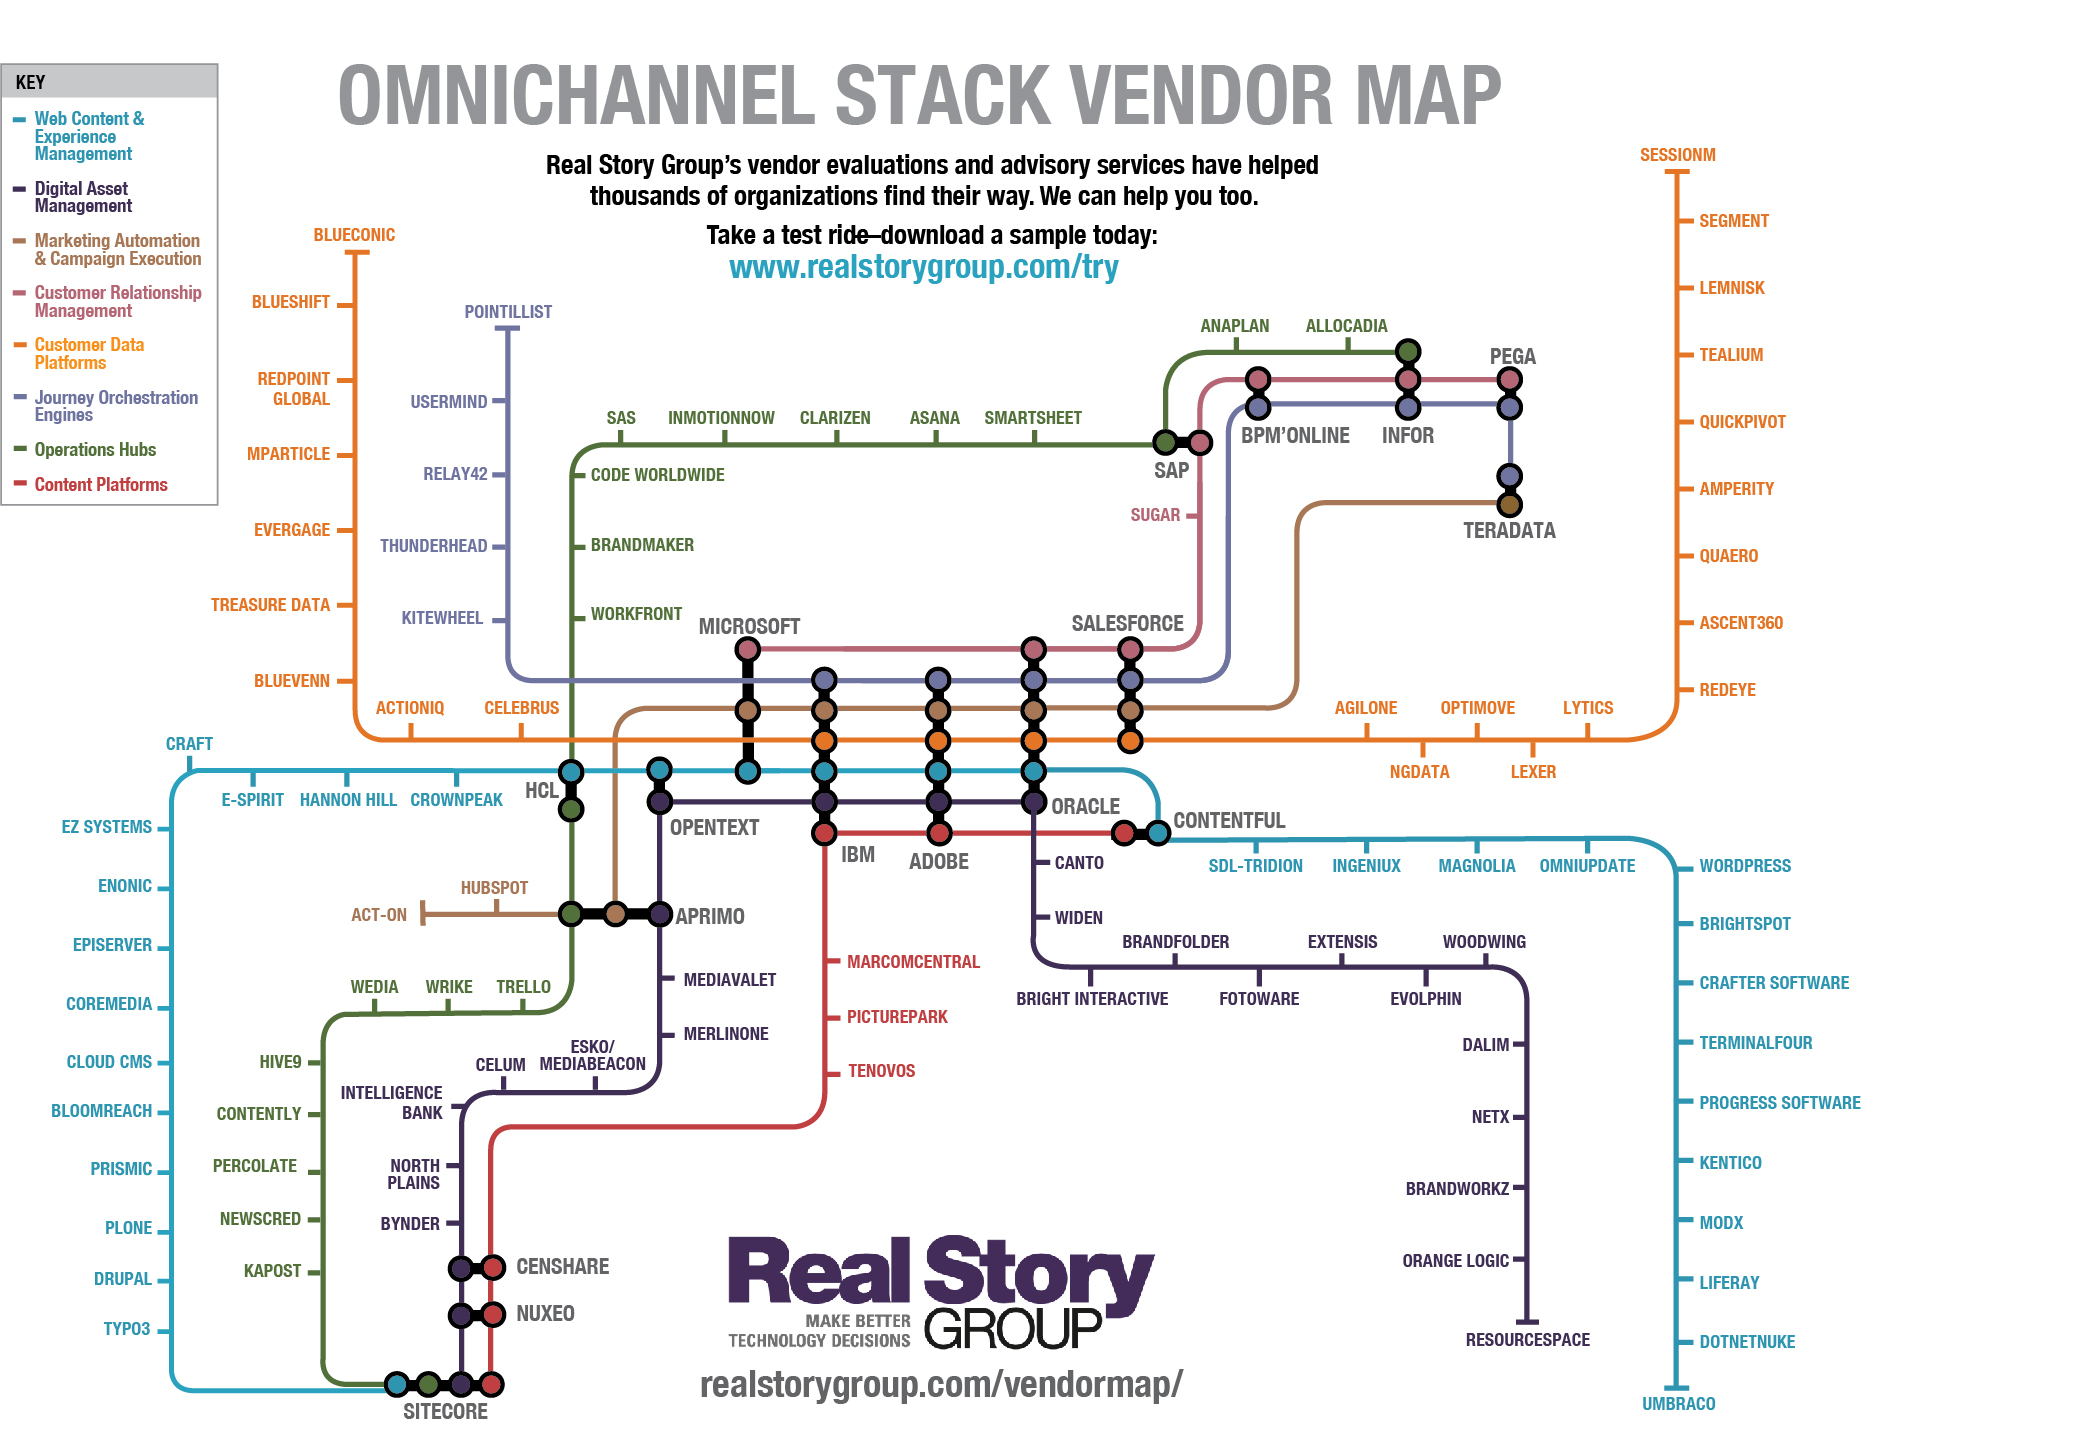 [Webinar] 2019 Omnichannel Vendor Map